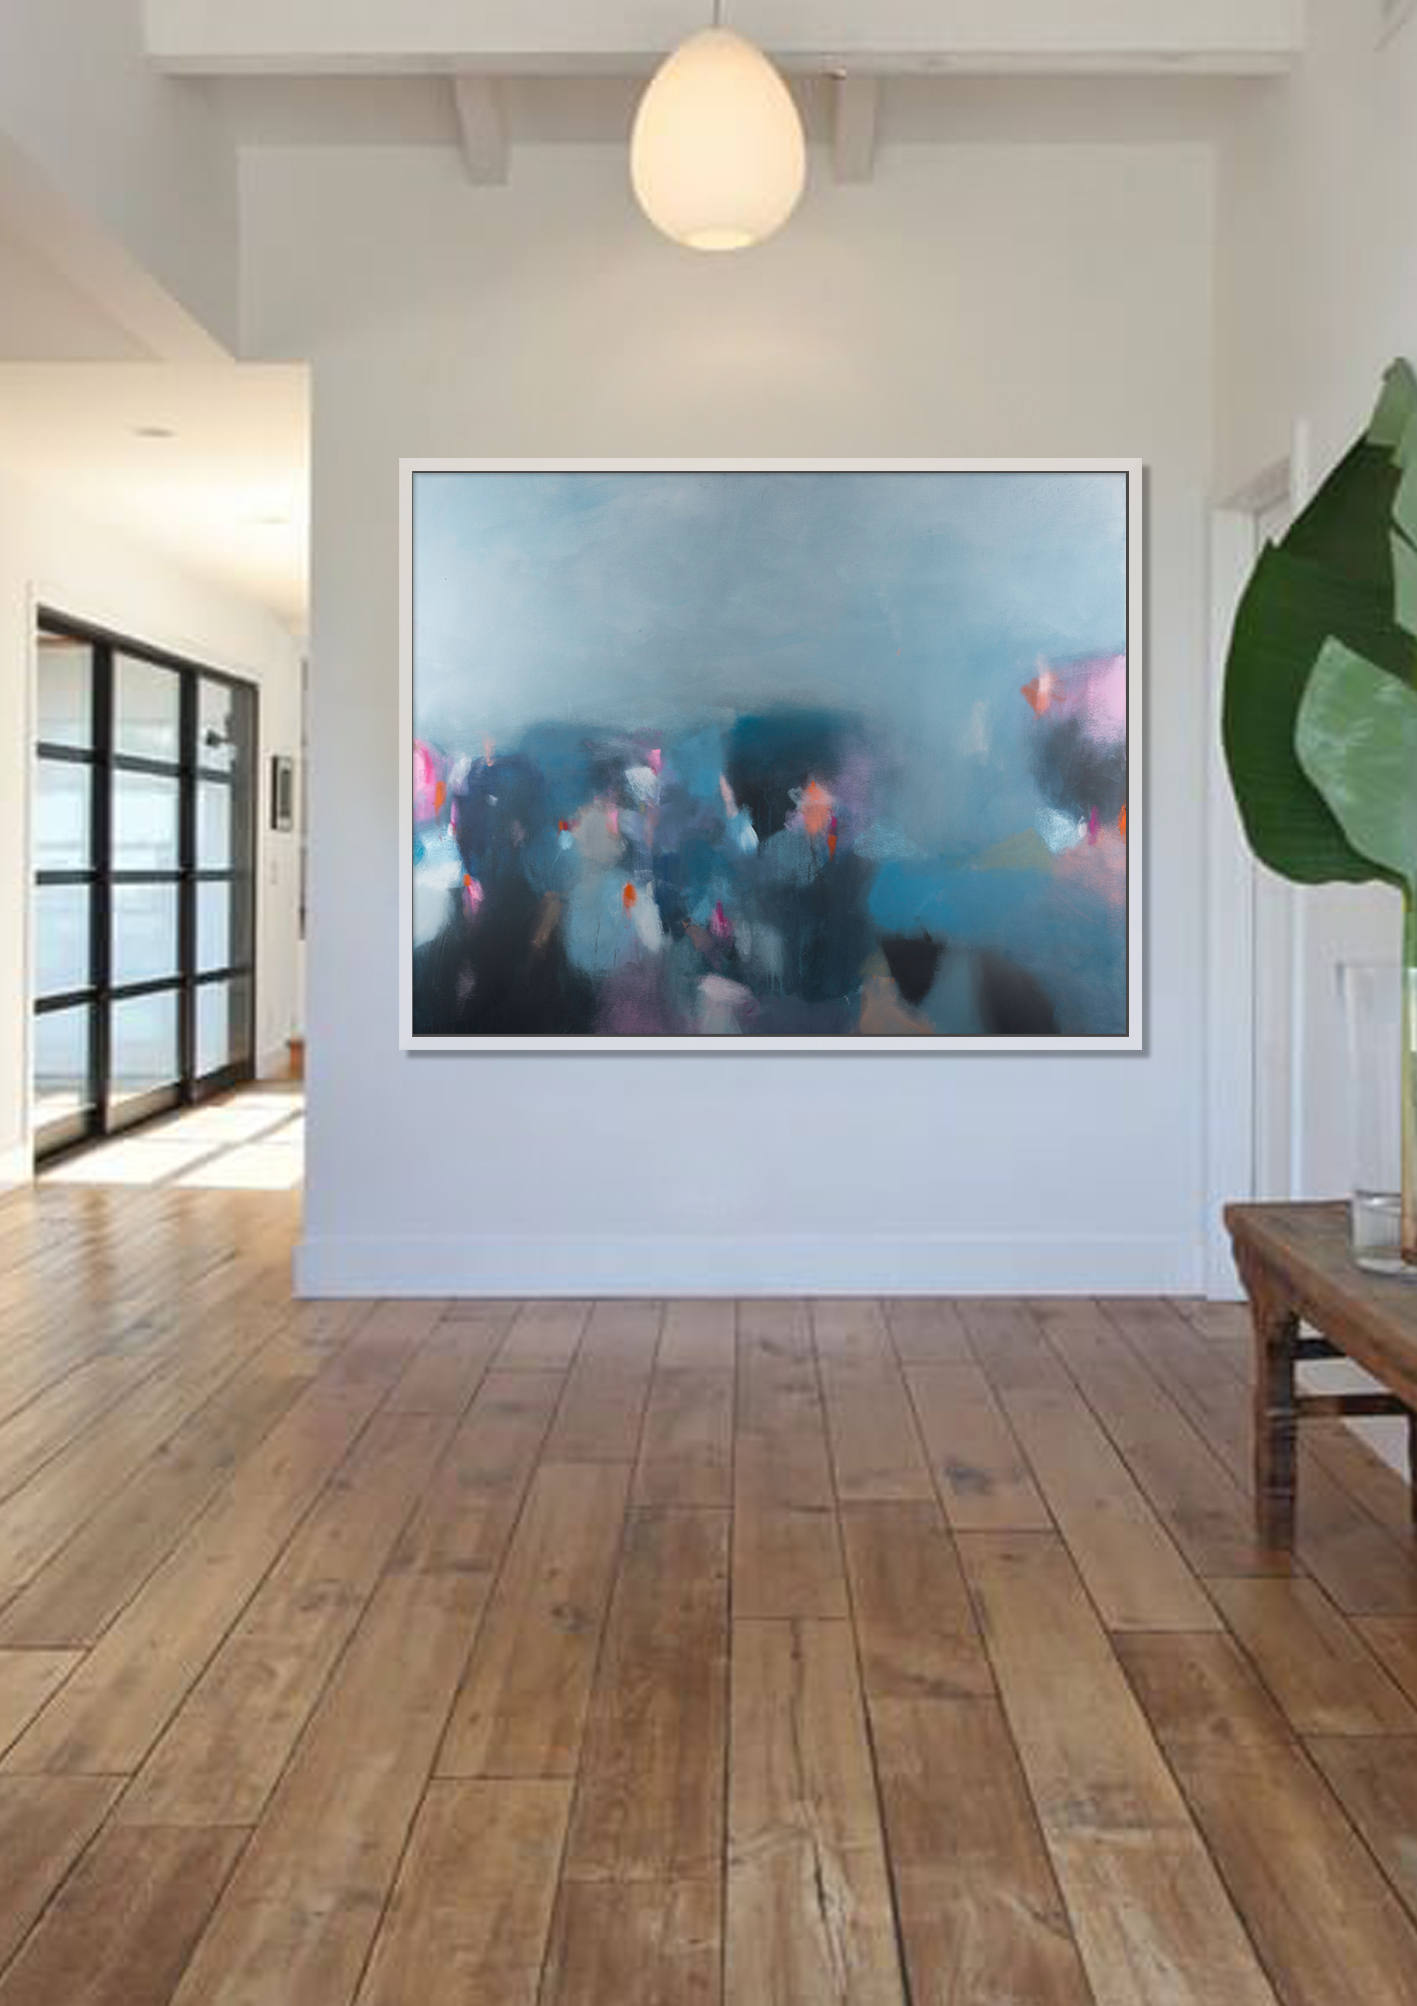 Abstract print, large modern wall art, abstract painting print, blue wall decor, living room wall art, Camilo Mattis - camilomattis.com